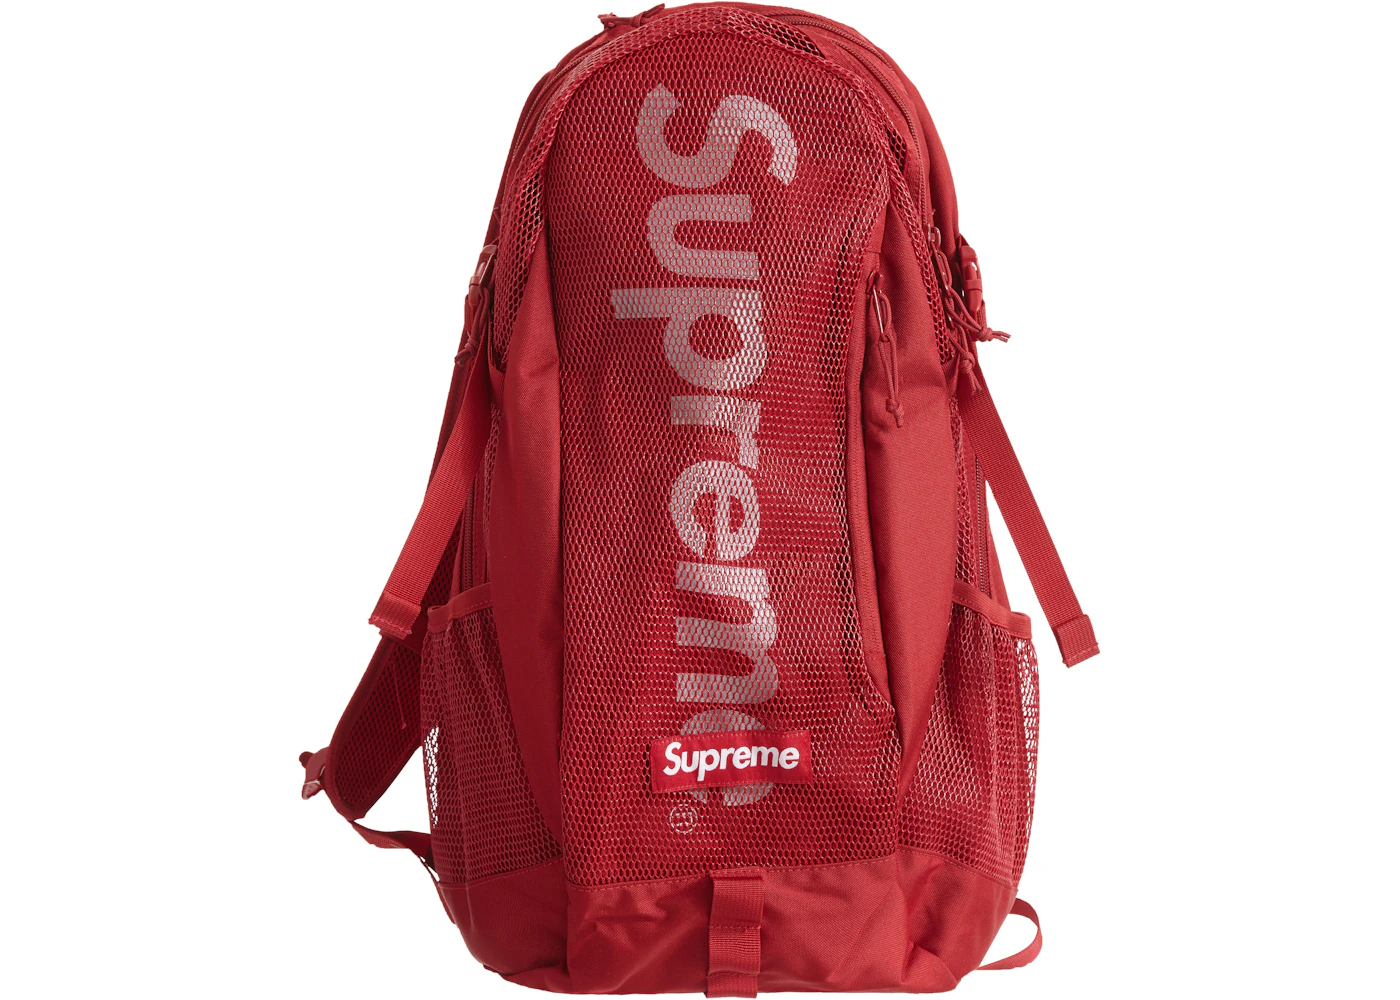 supreme red backpack